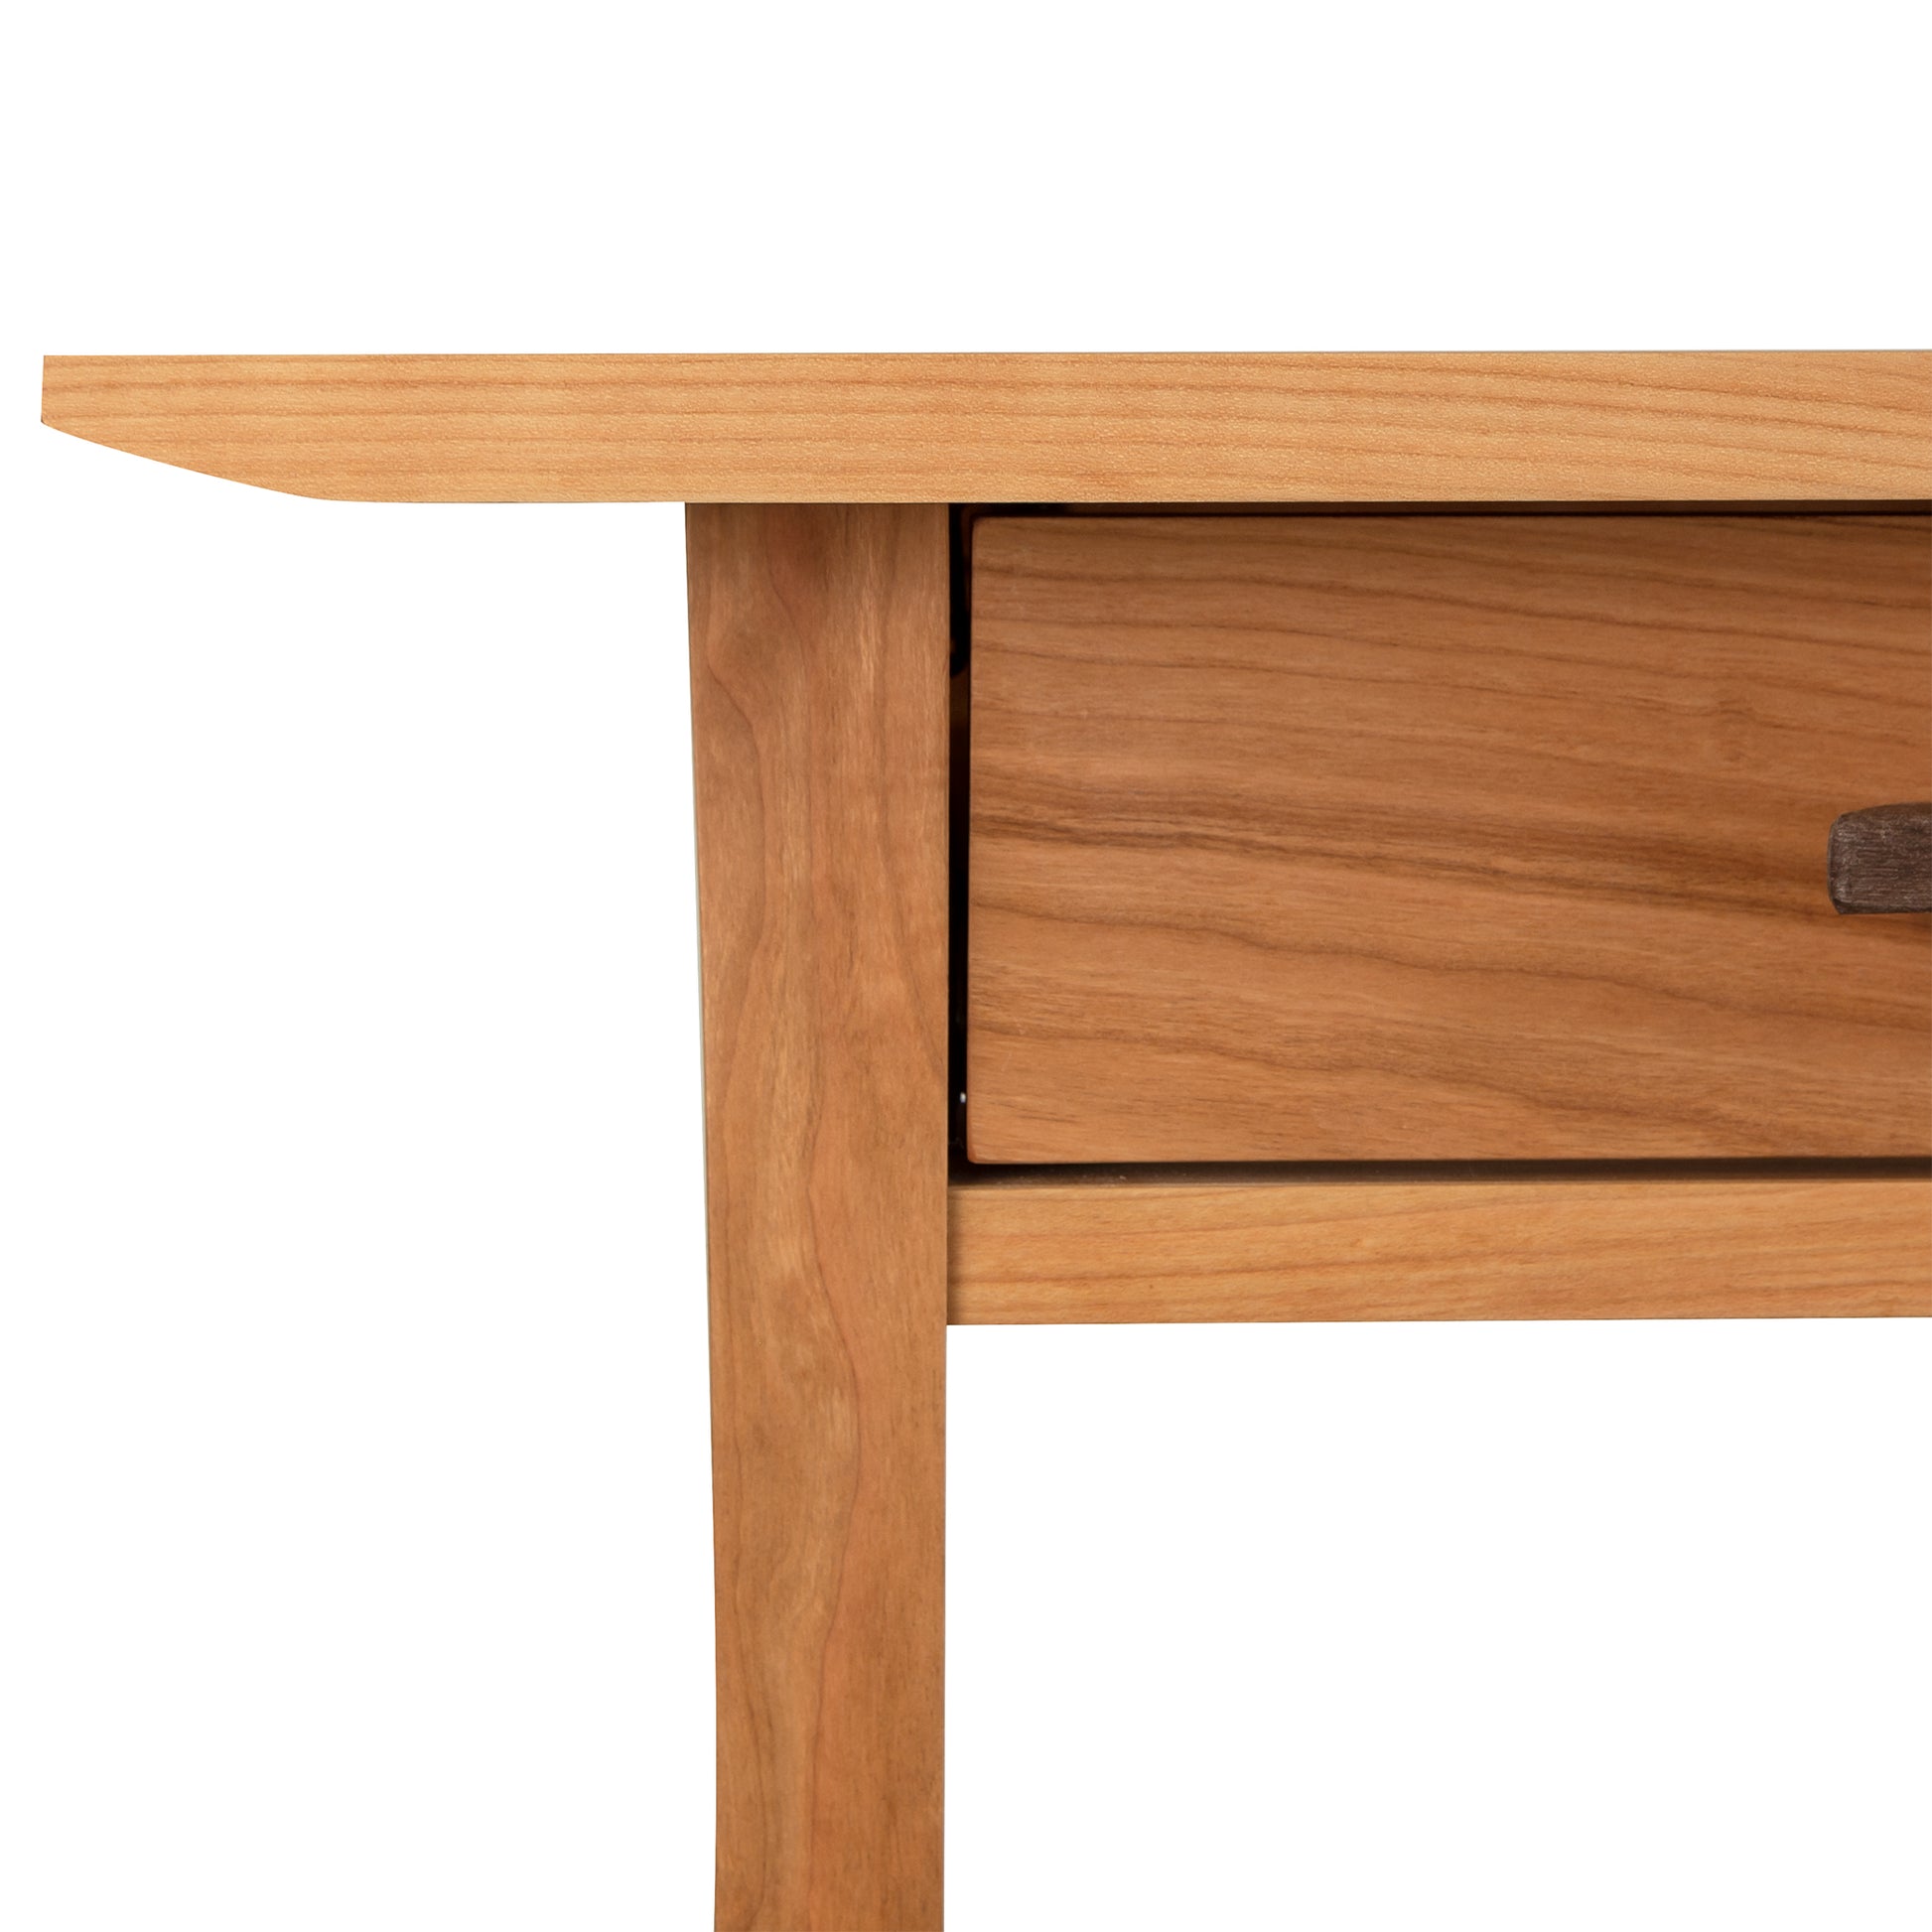 A Vermont Furniture Designs Contemporary Craftsman Library Desk.